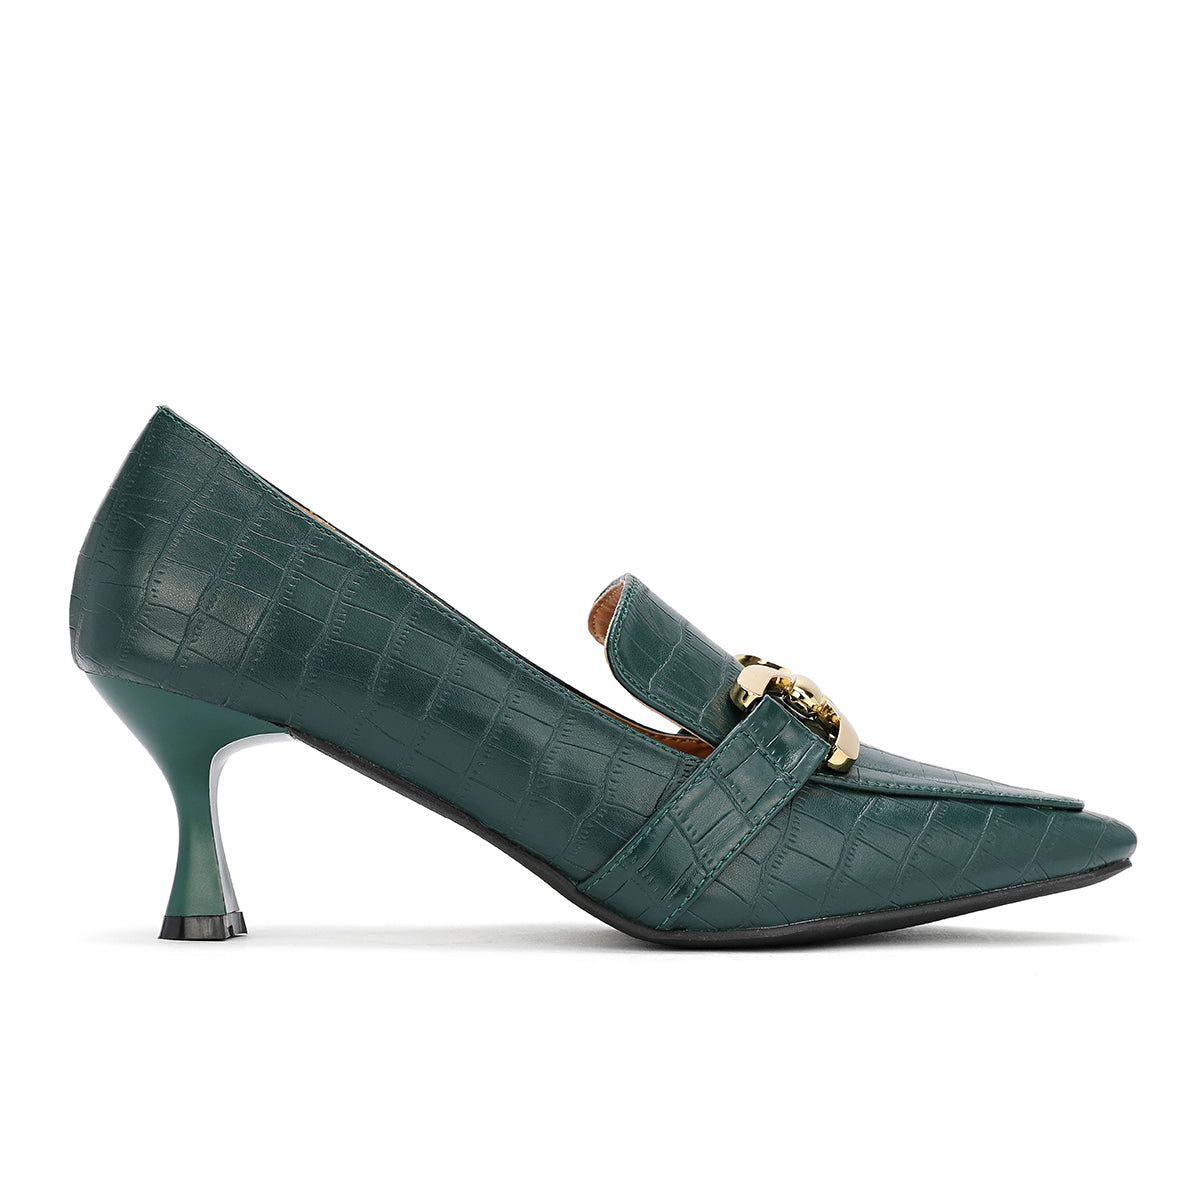 Elegant women's shoes with a medium high heel, green